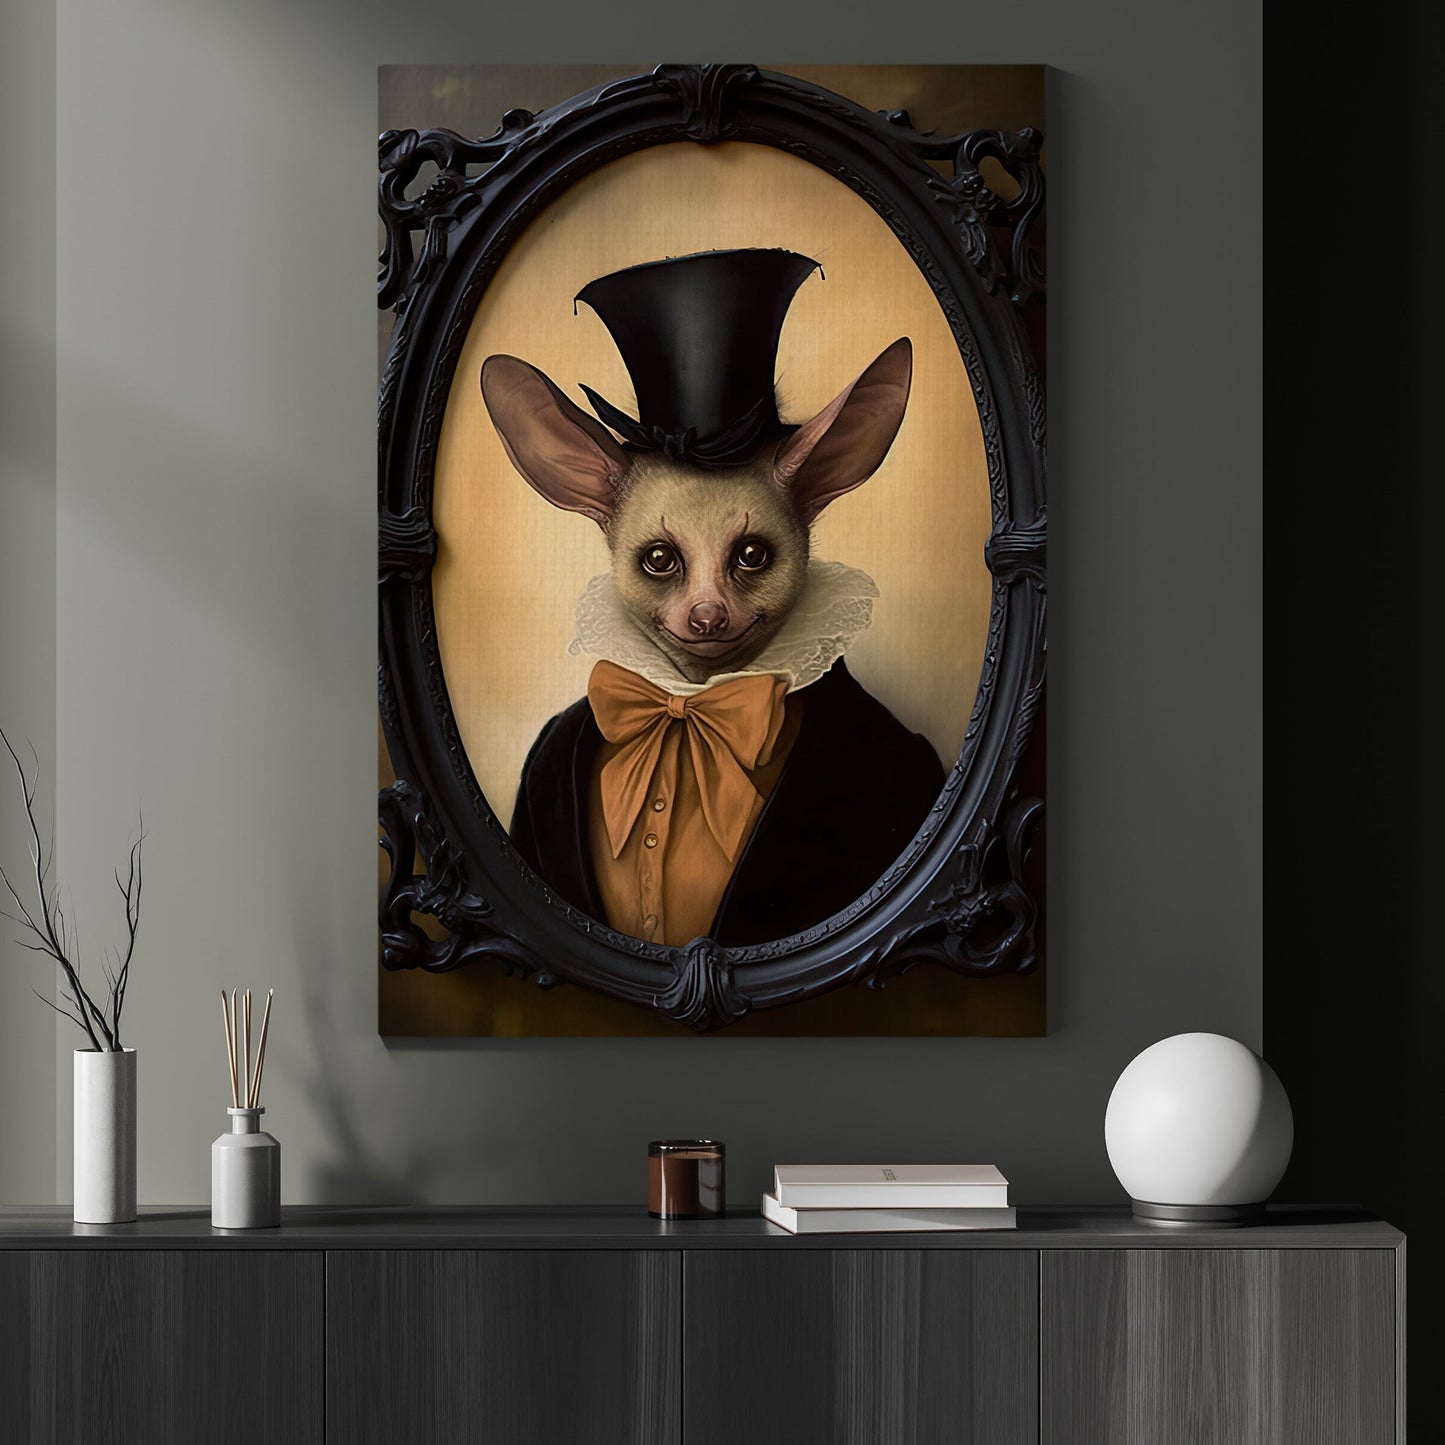 Mr. Bat In Suit Vampire, Victorian Bat Canvas Painting, Gothic Wall Art Decor - Bat Poster Gift